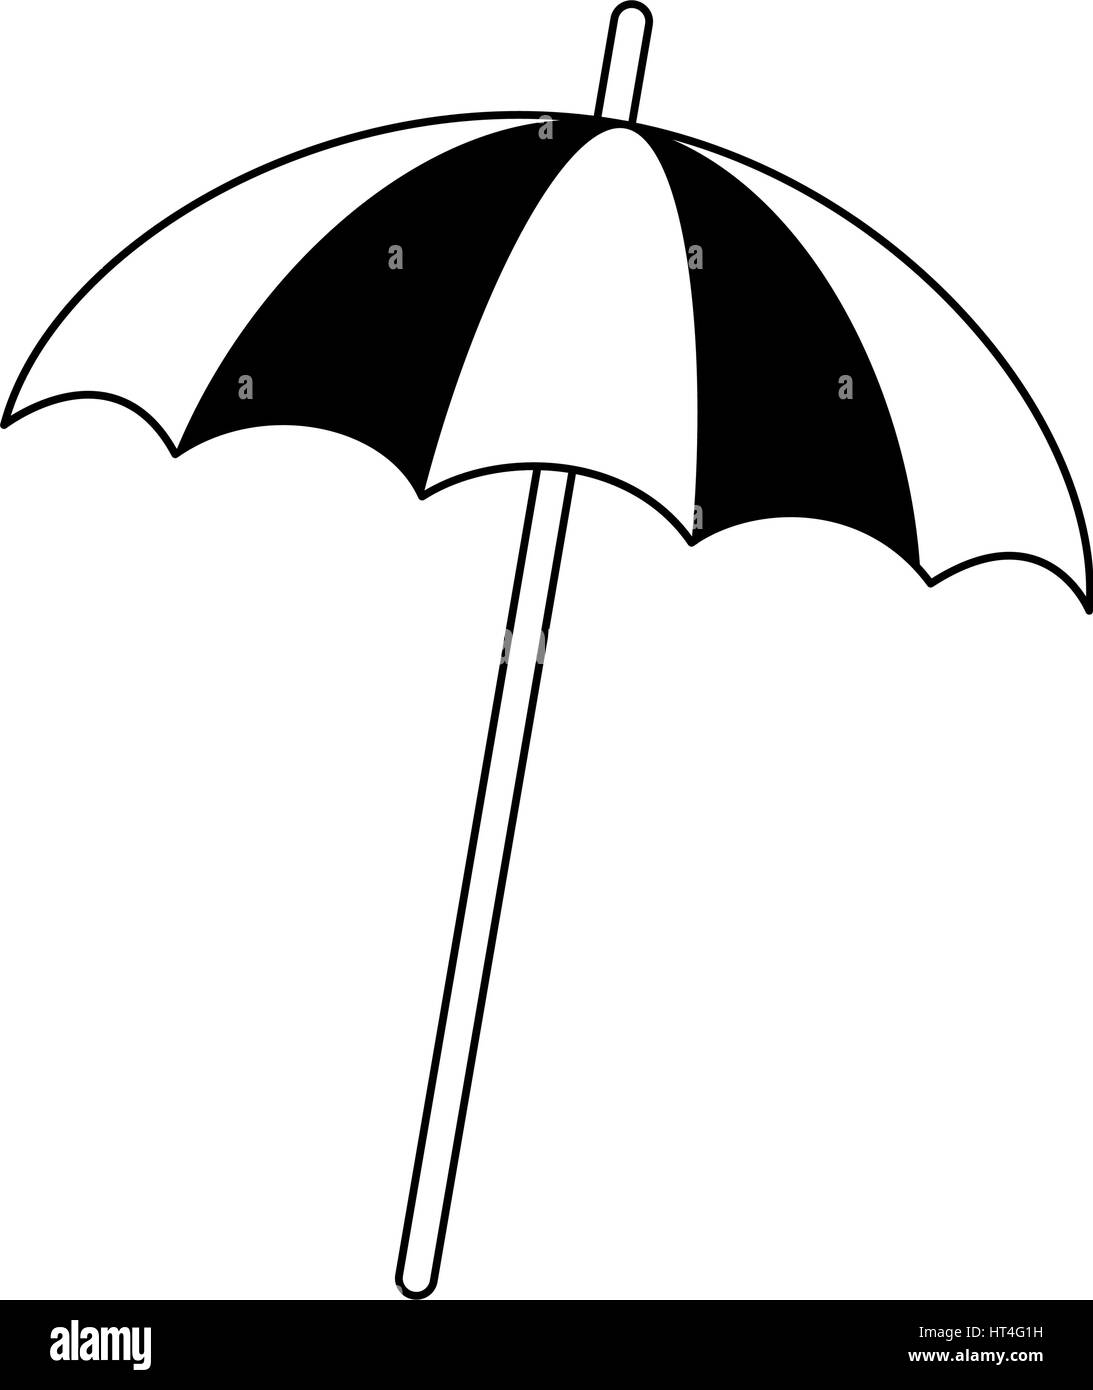 striped parasol icon image Stock Vector